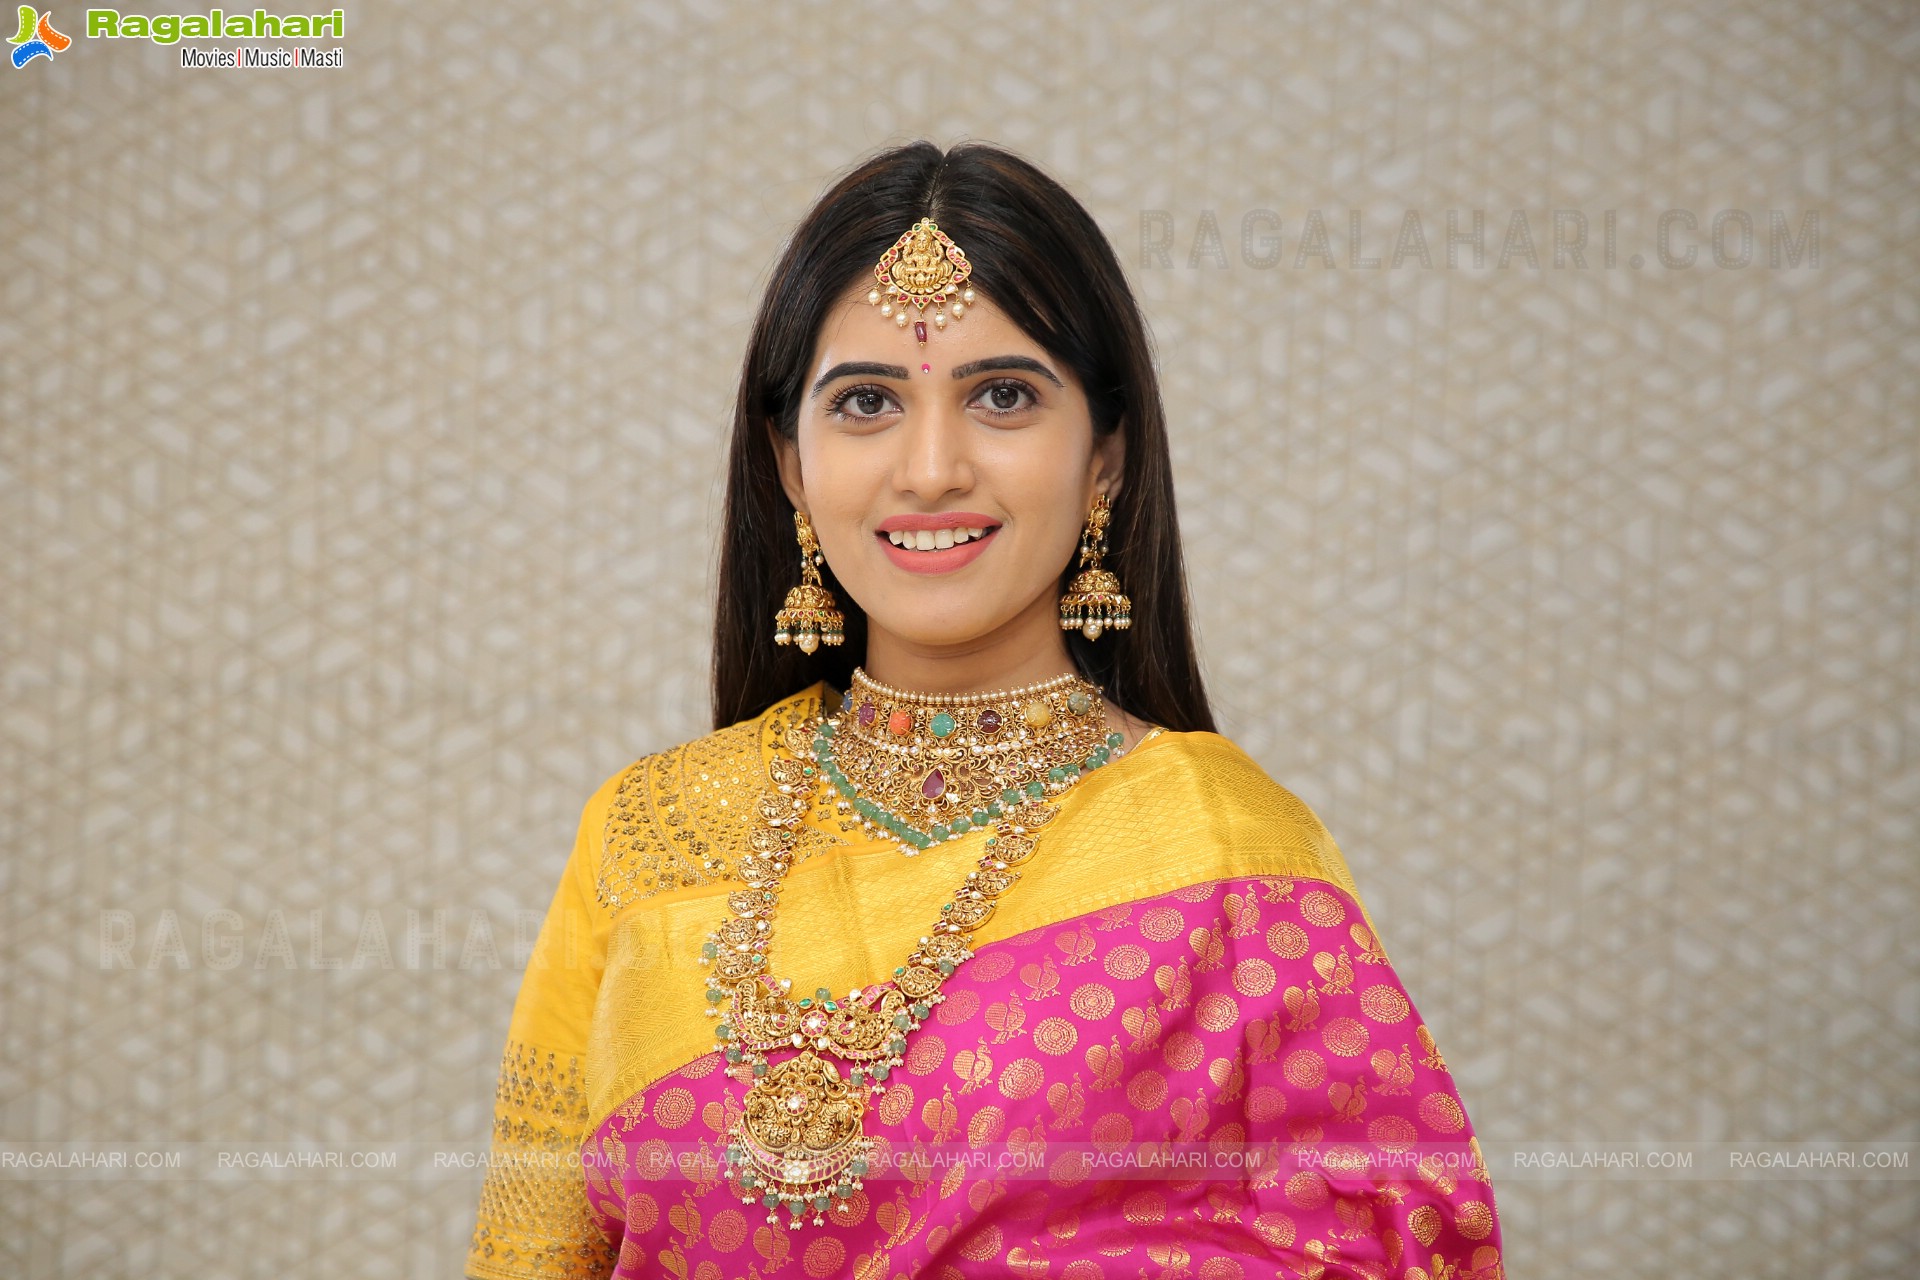 Sravanthi Chokarapu Poses With Jewellery, HD Photo Gallery